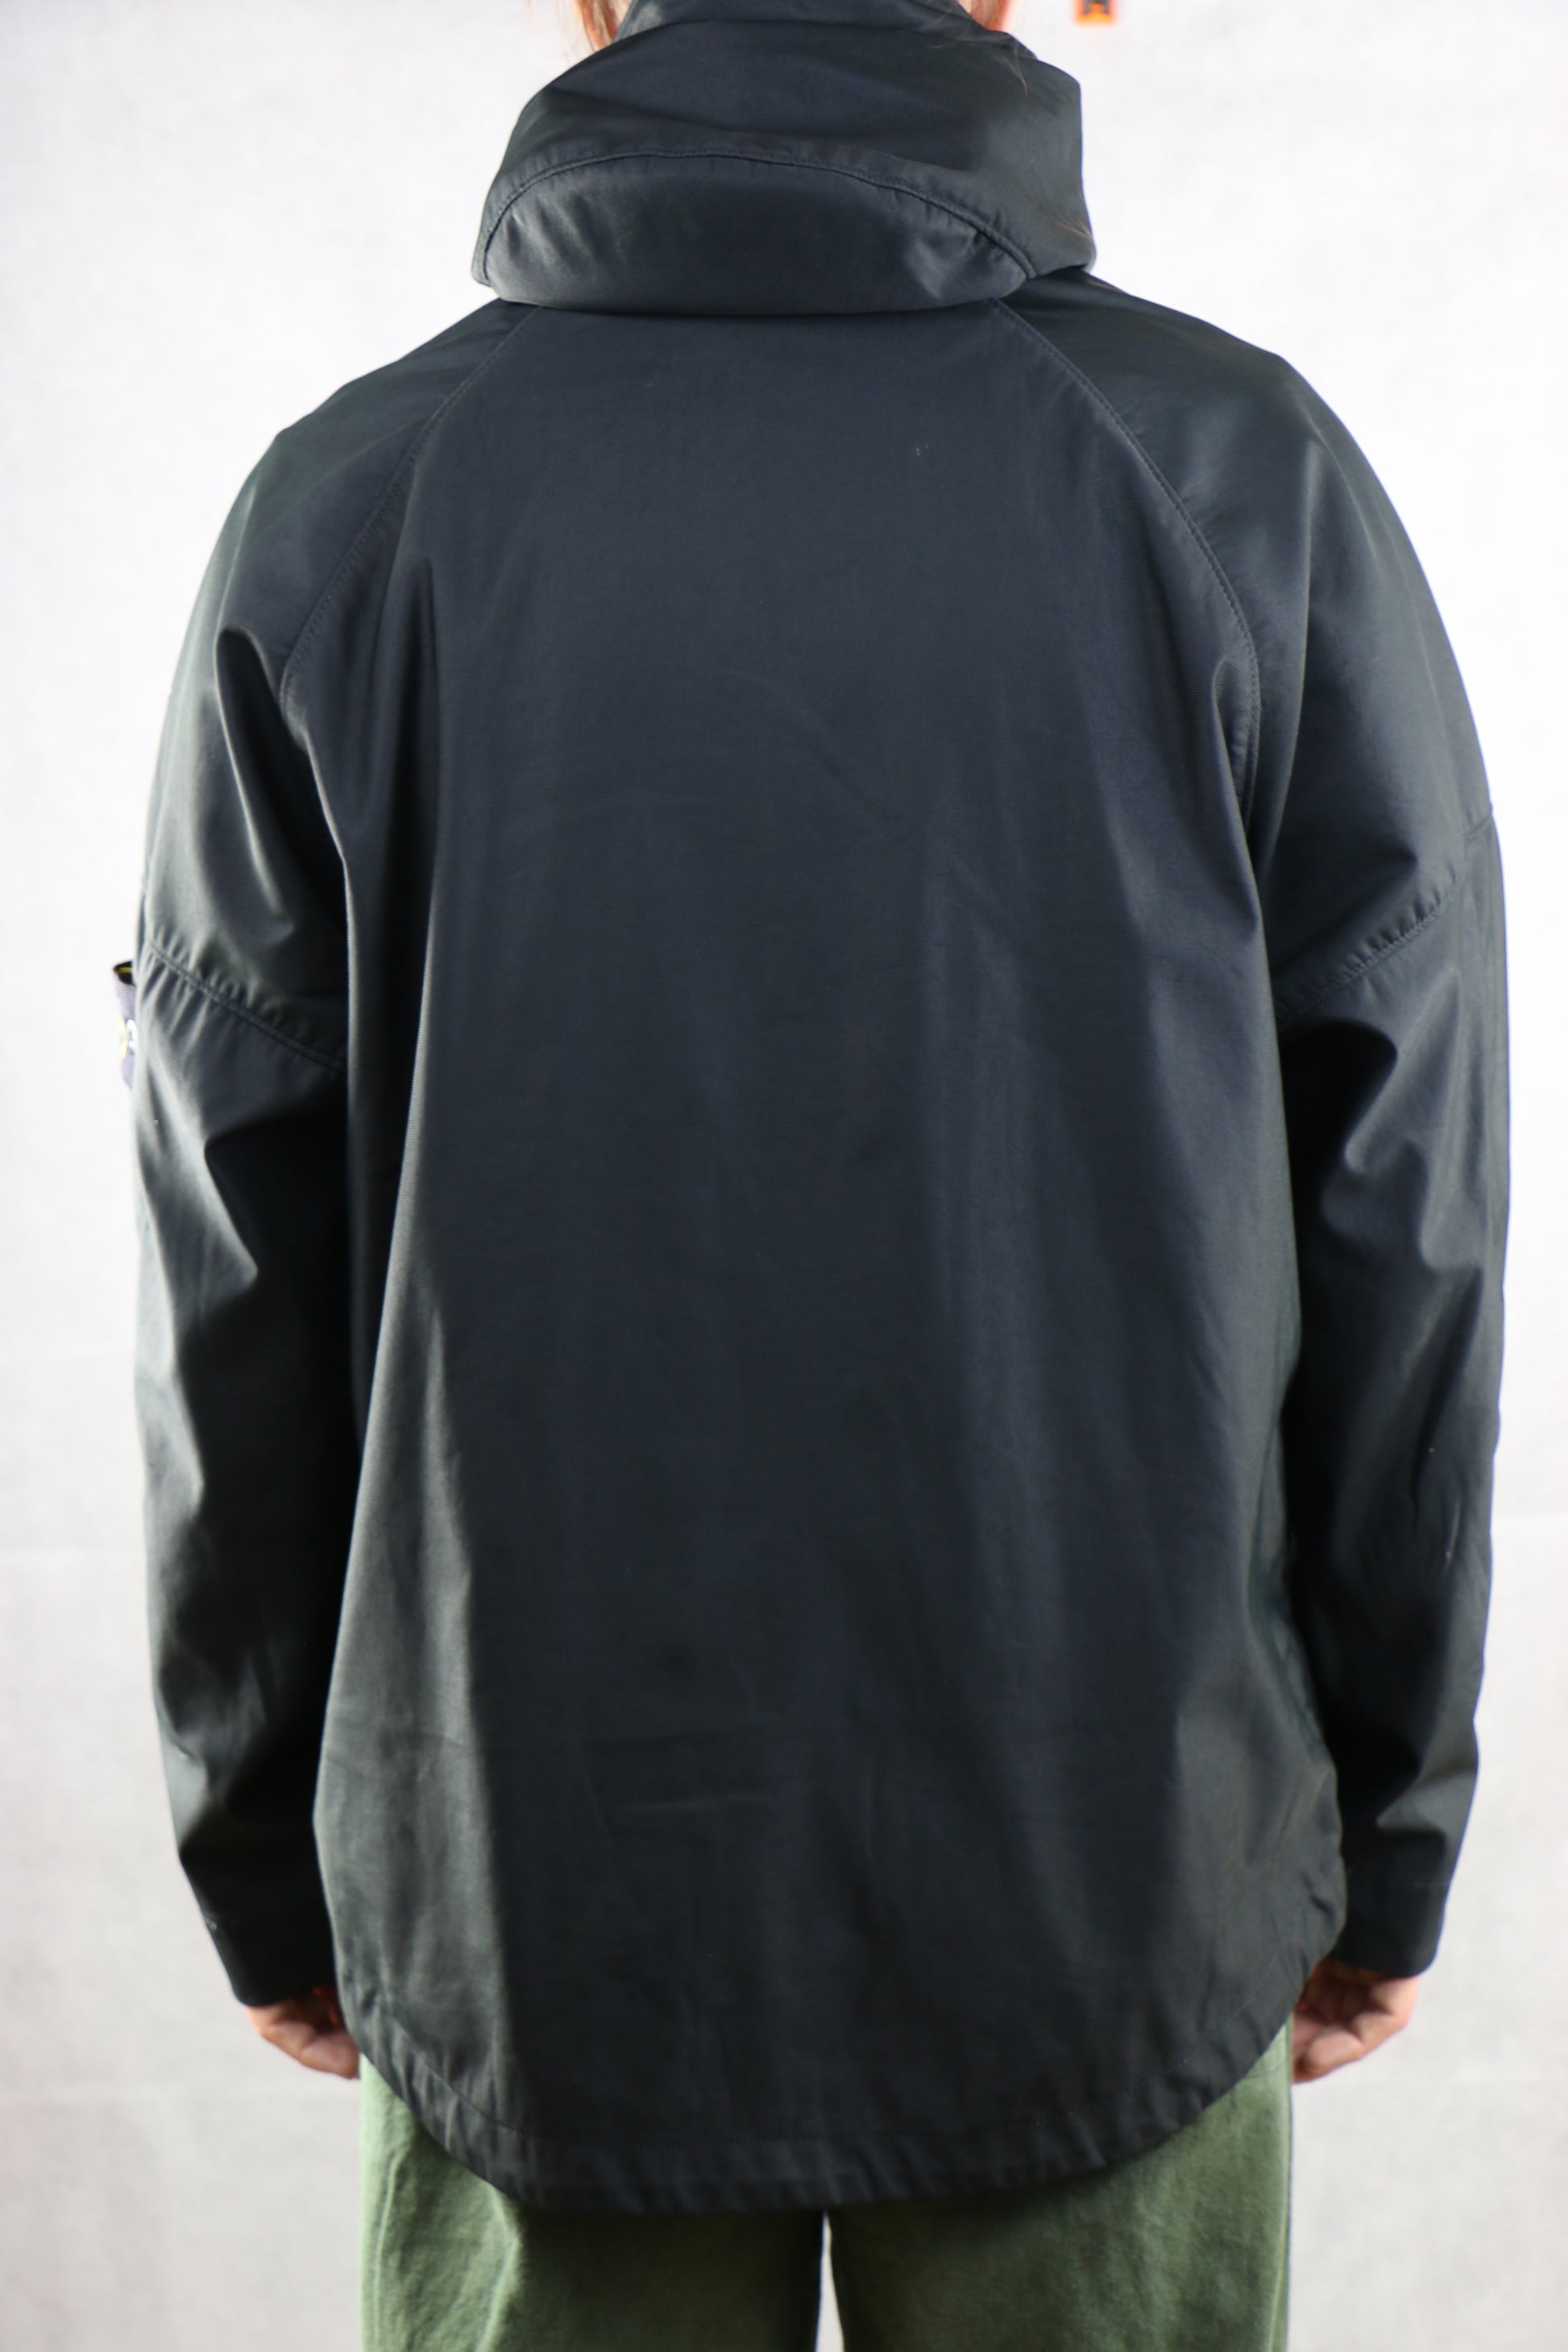 Stone Island Jacket with hood - vintage clothing clochard92.com